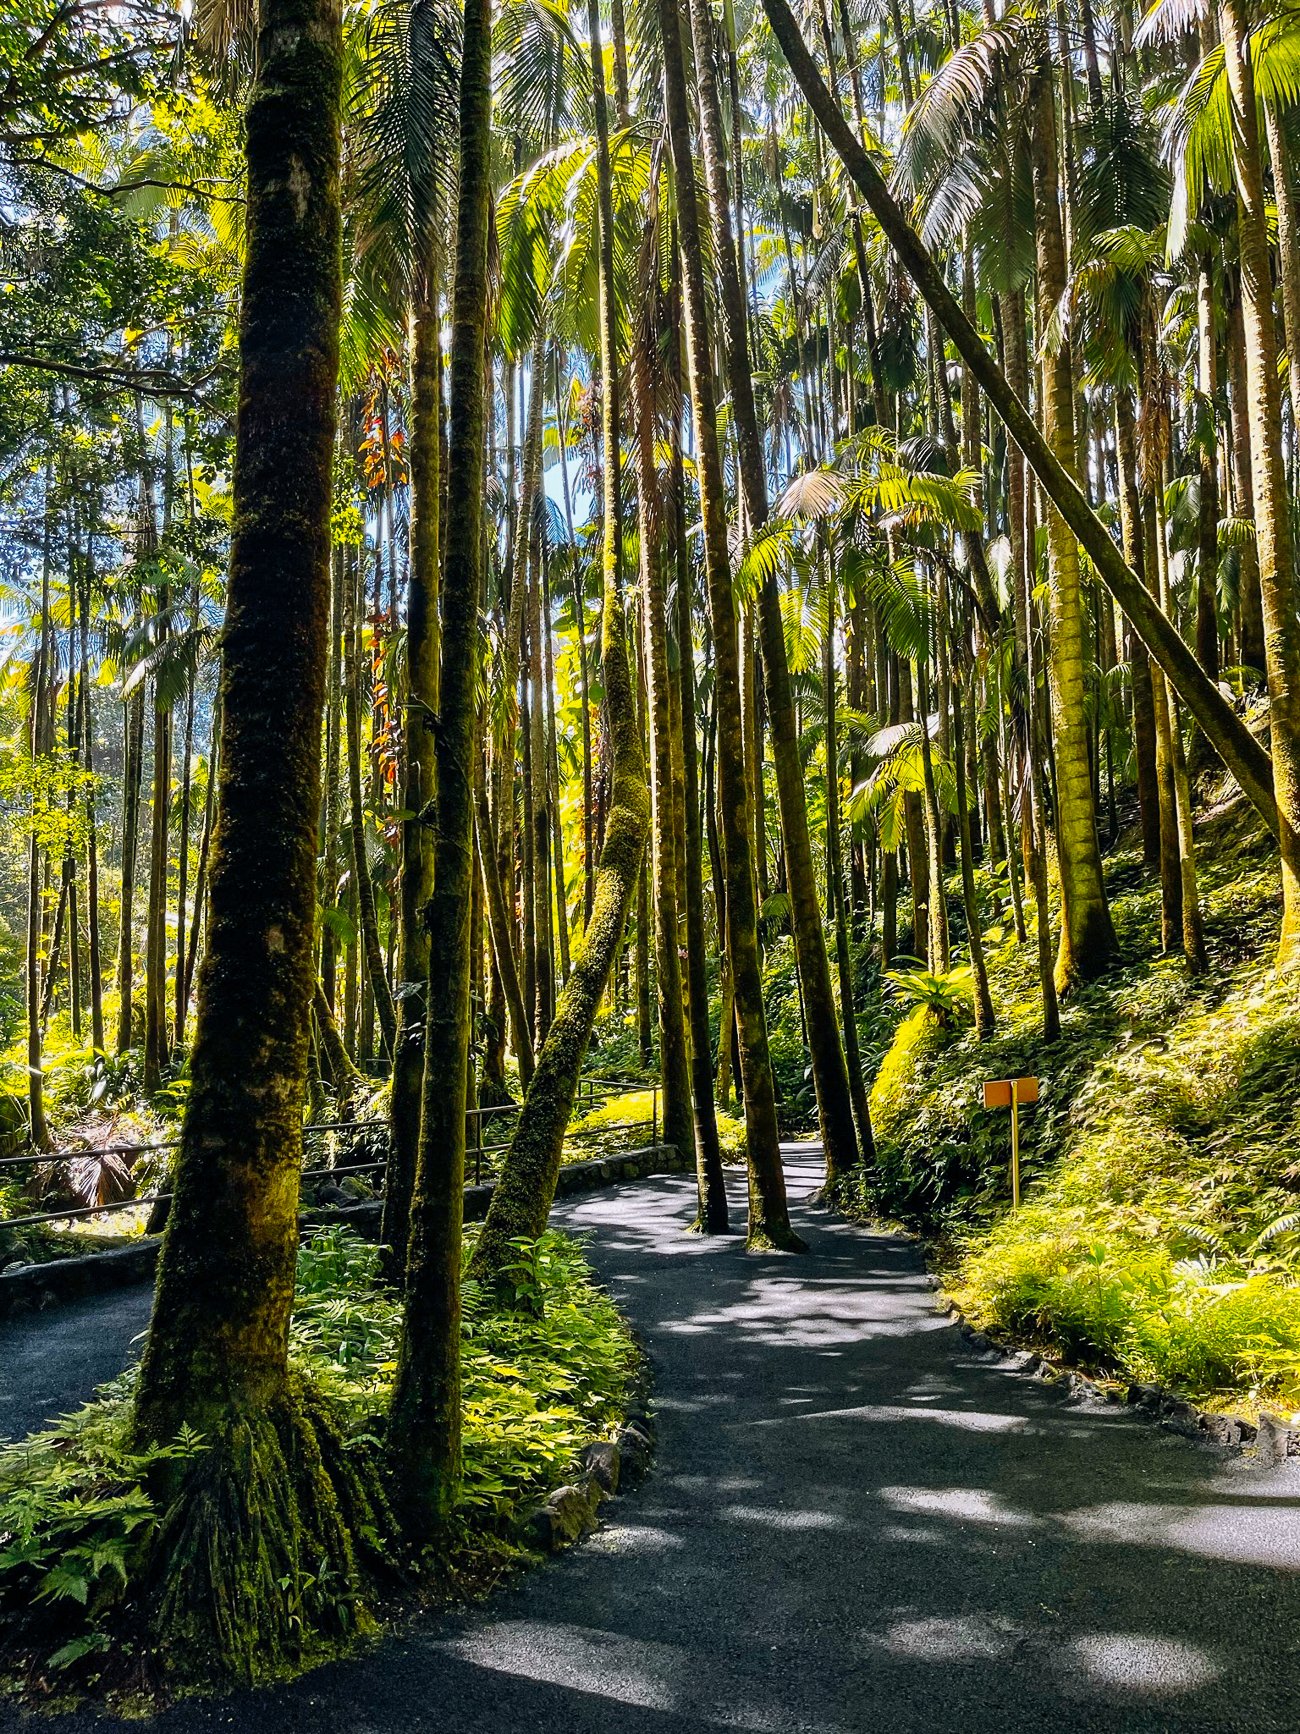 trees in Hawaii tropical bioreserve